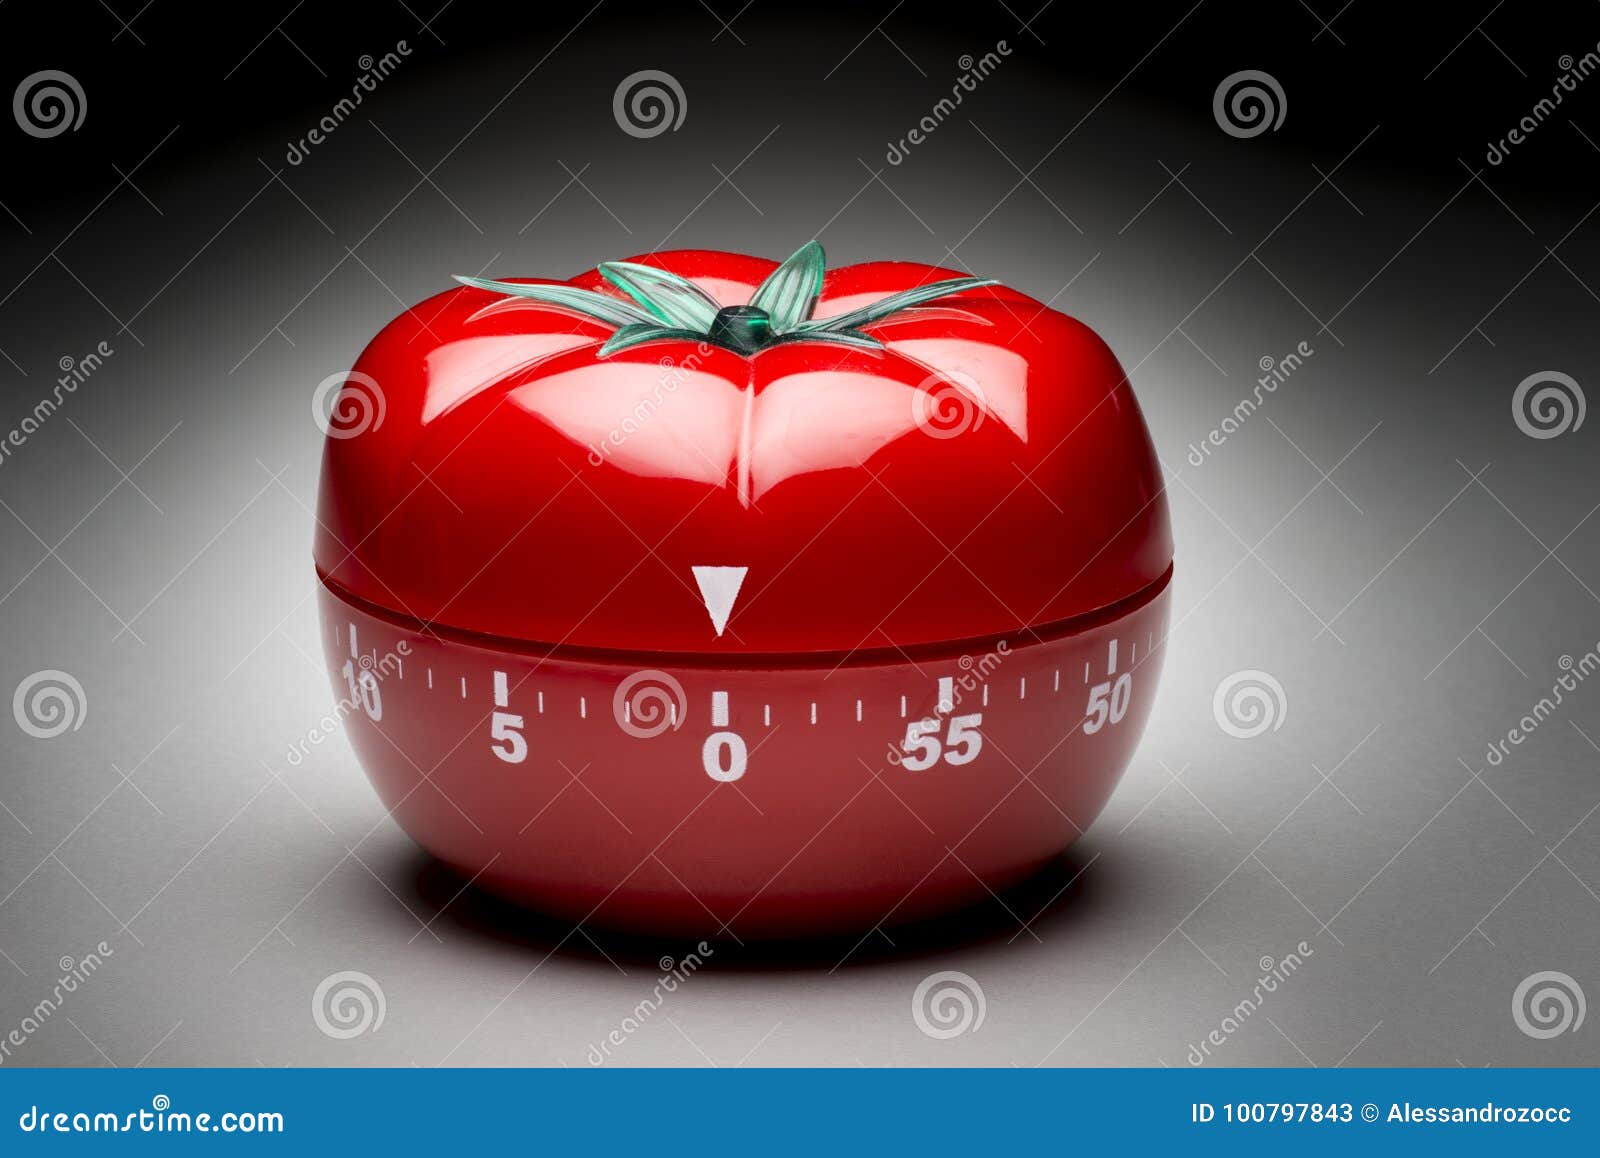 tomato timer method